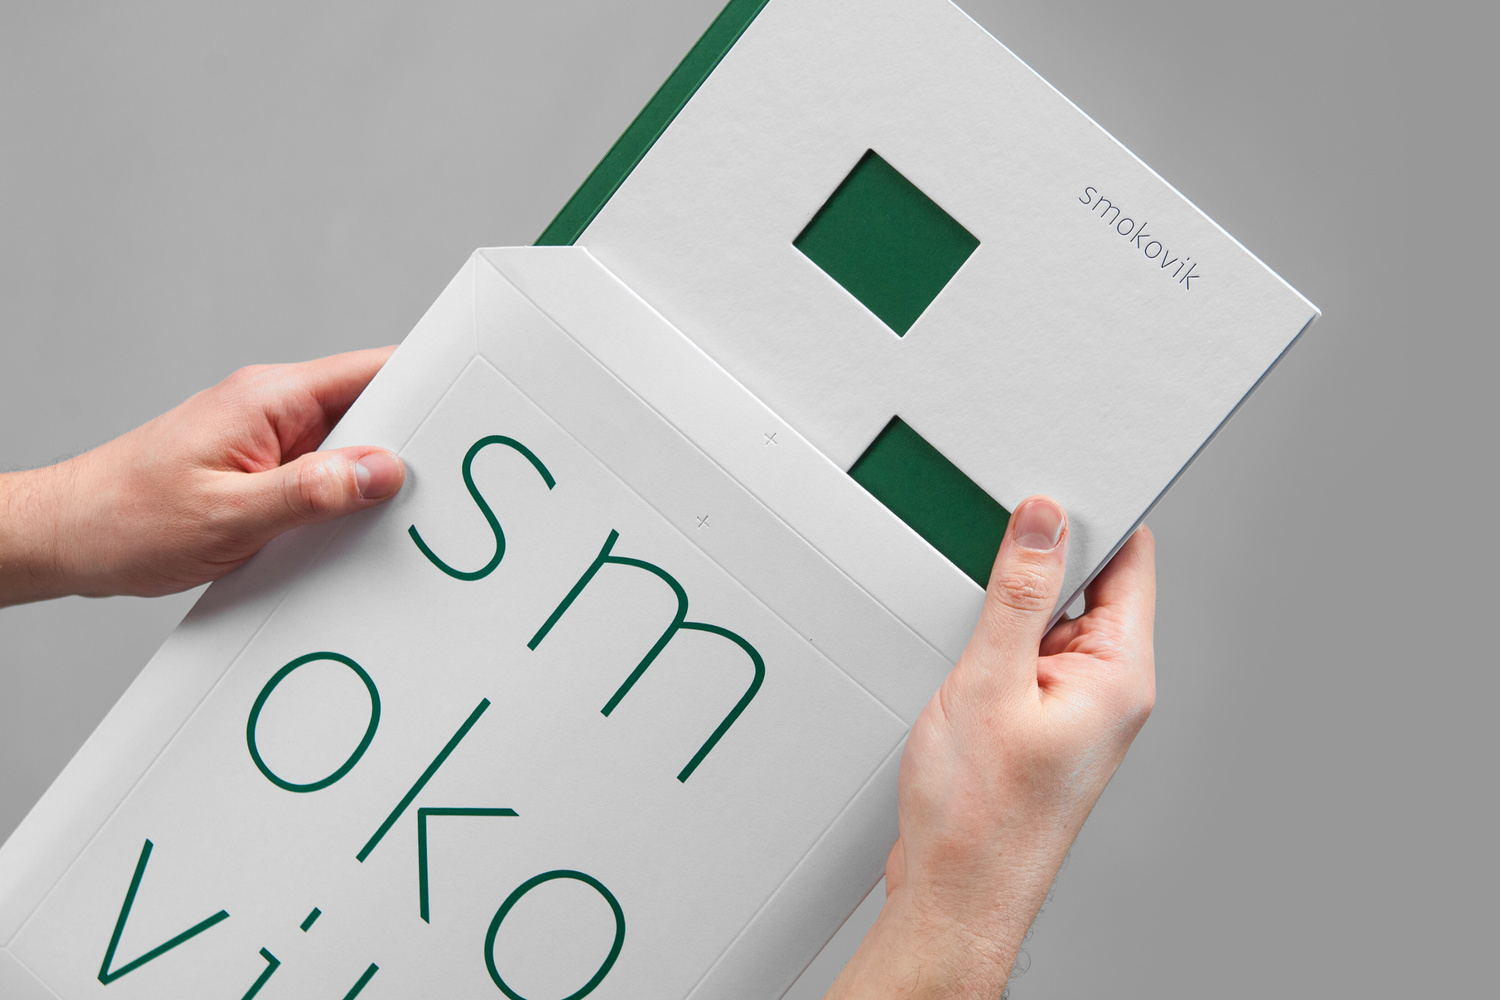 Branding and brochure design by Studio8585 for Croatian property development Smokovik 